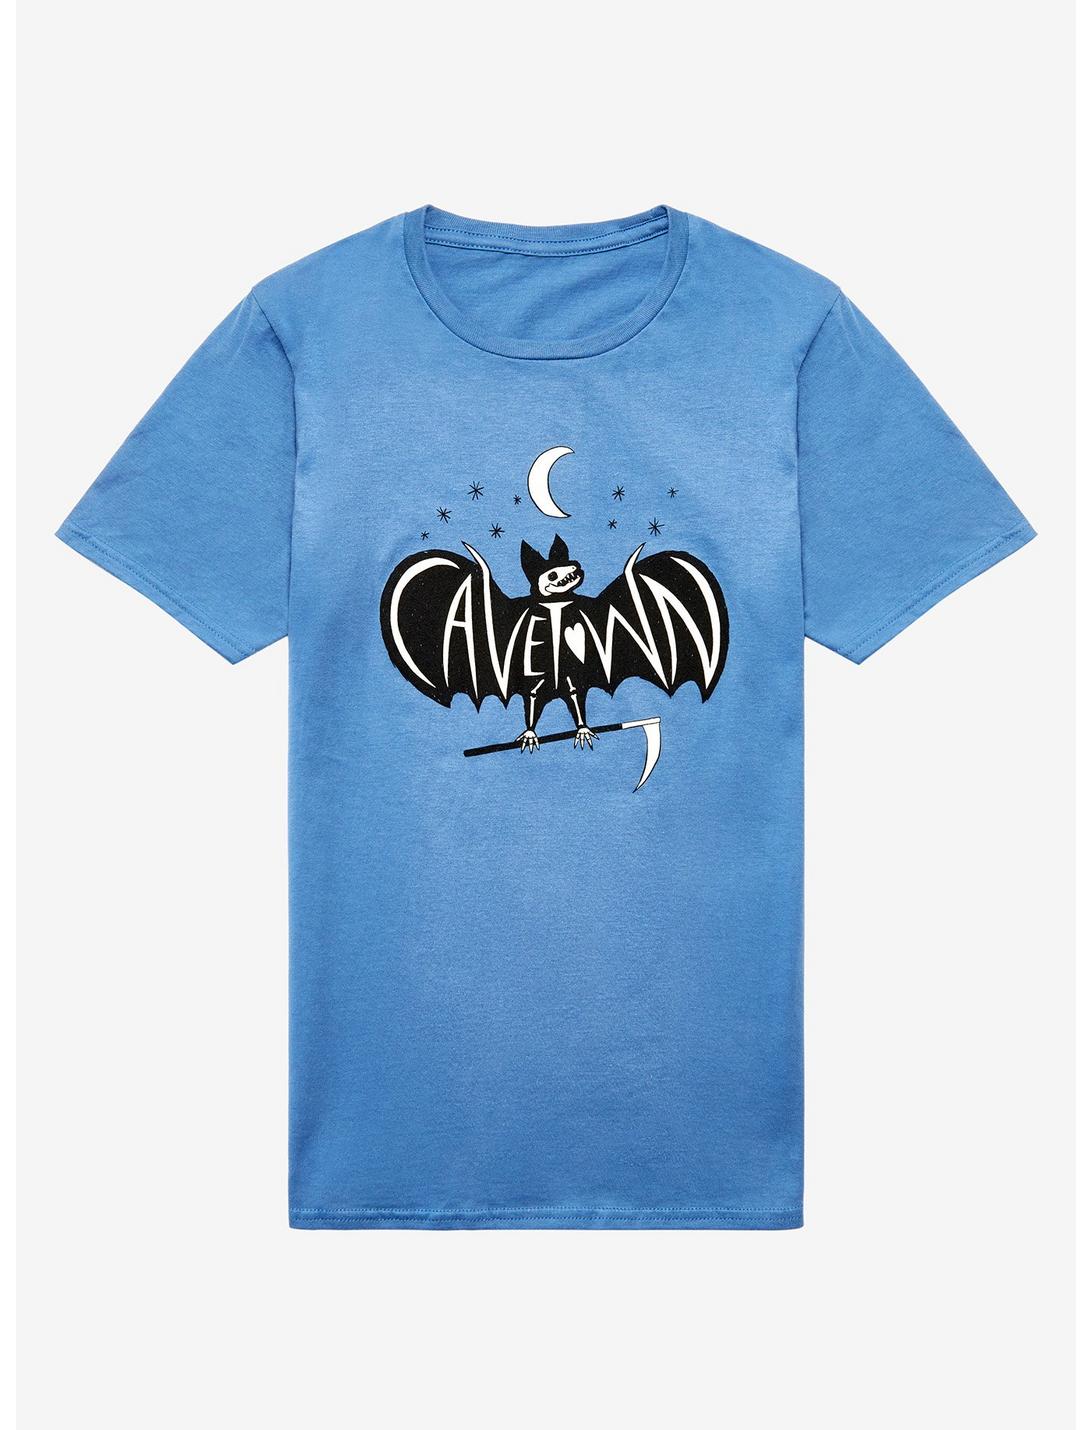 Cavetown Bat Logo Boyfriend Fit Girls T-Shirt, BLUE, hi-res